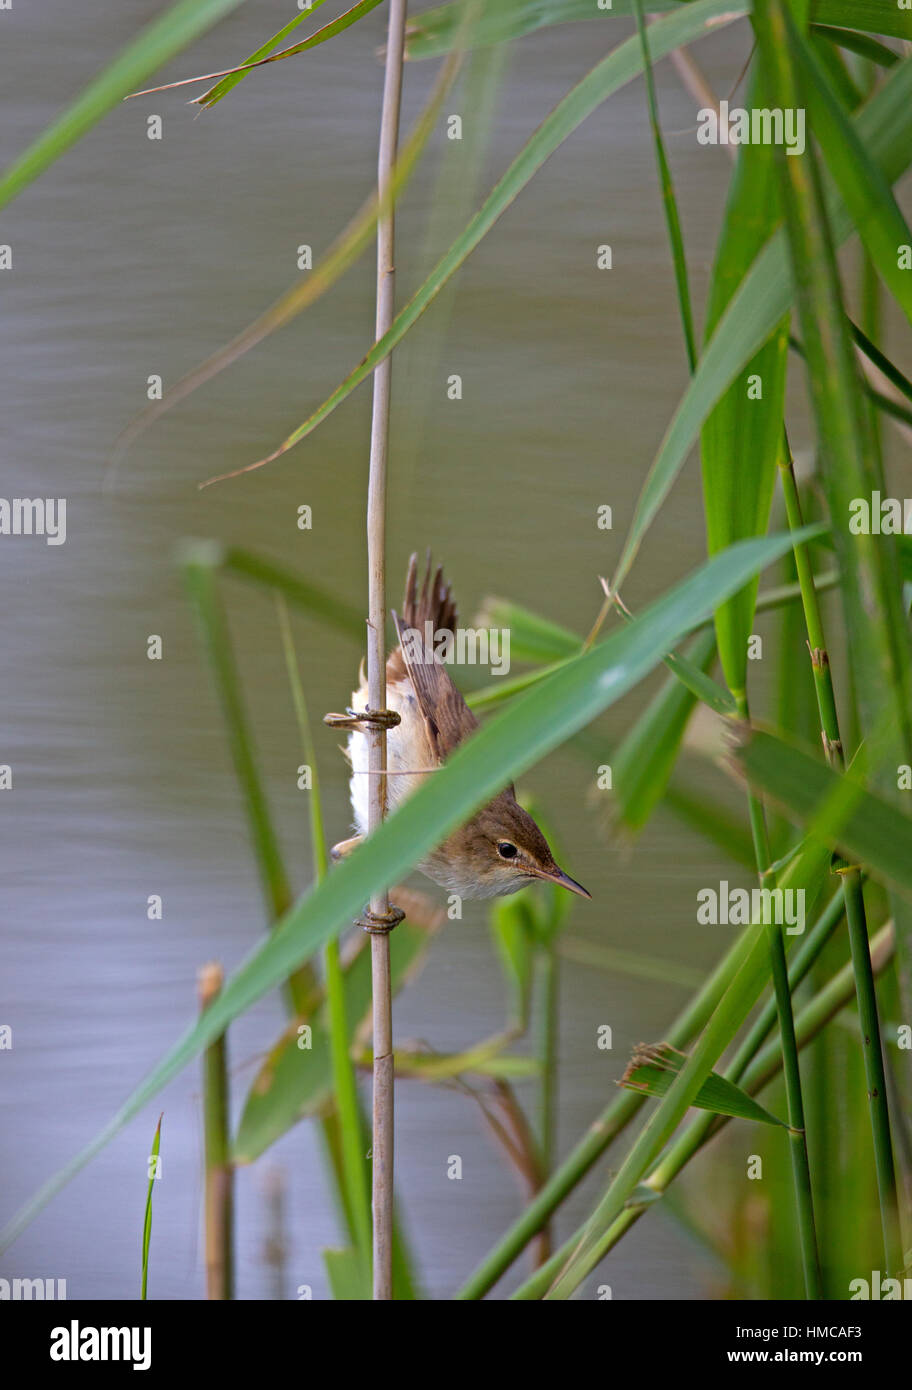 Reed Warbler: Acrocephalus scirpaceus in the phragmites reeds. Stock Photo